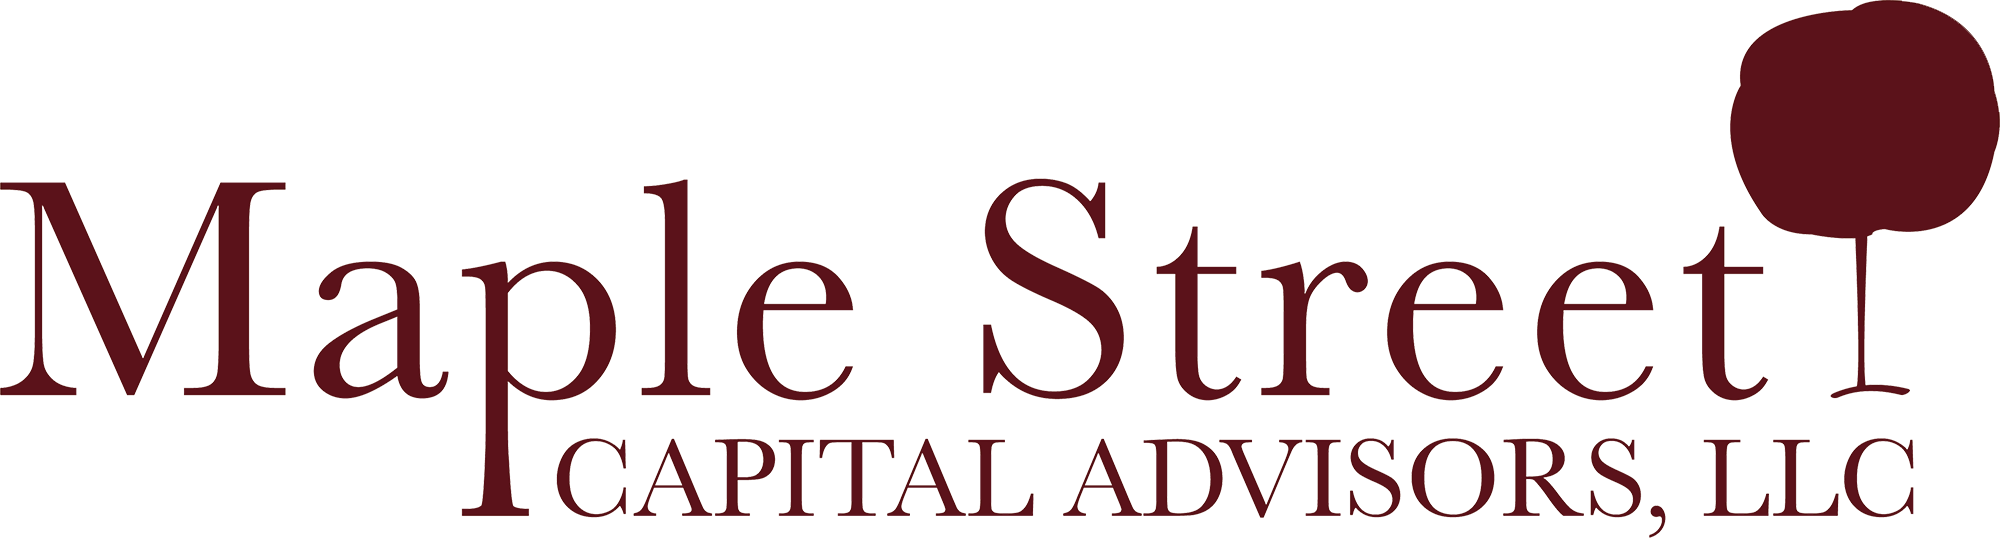 Maple Street Capital Advisors